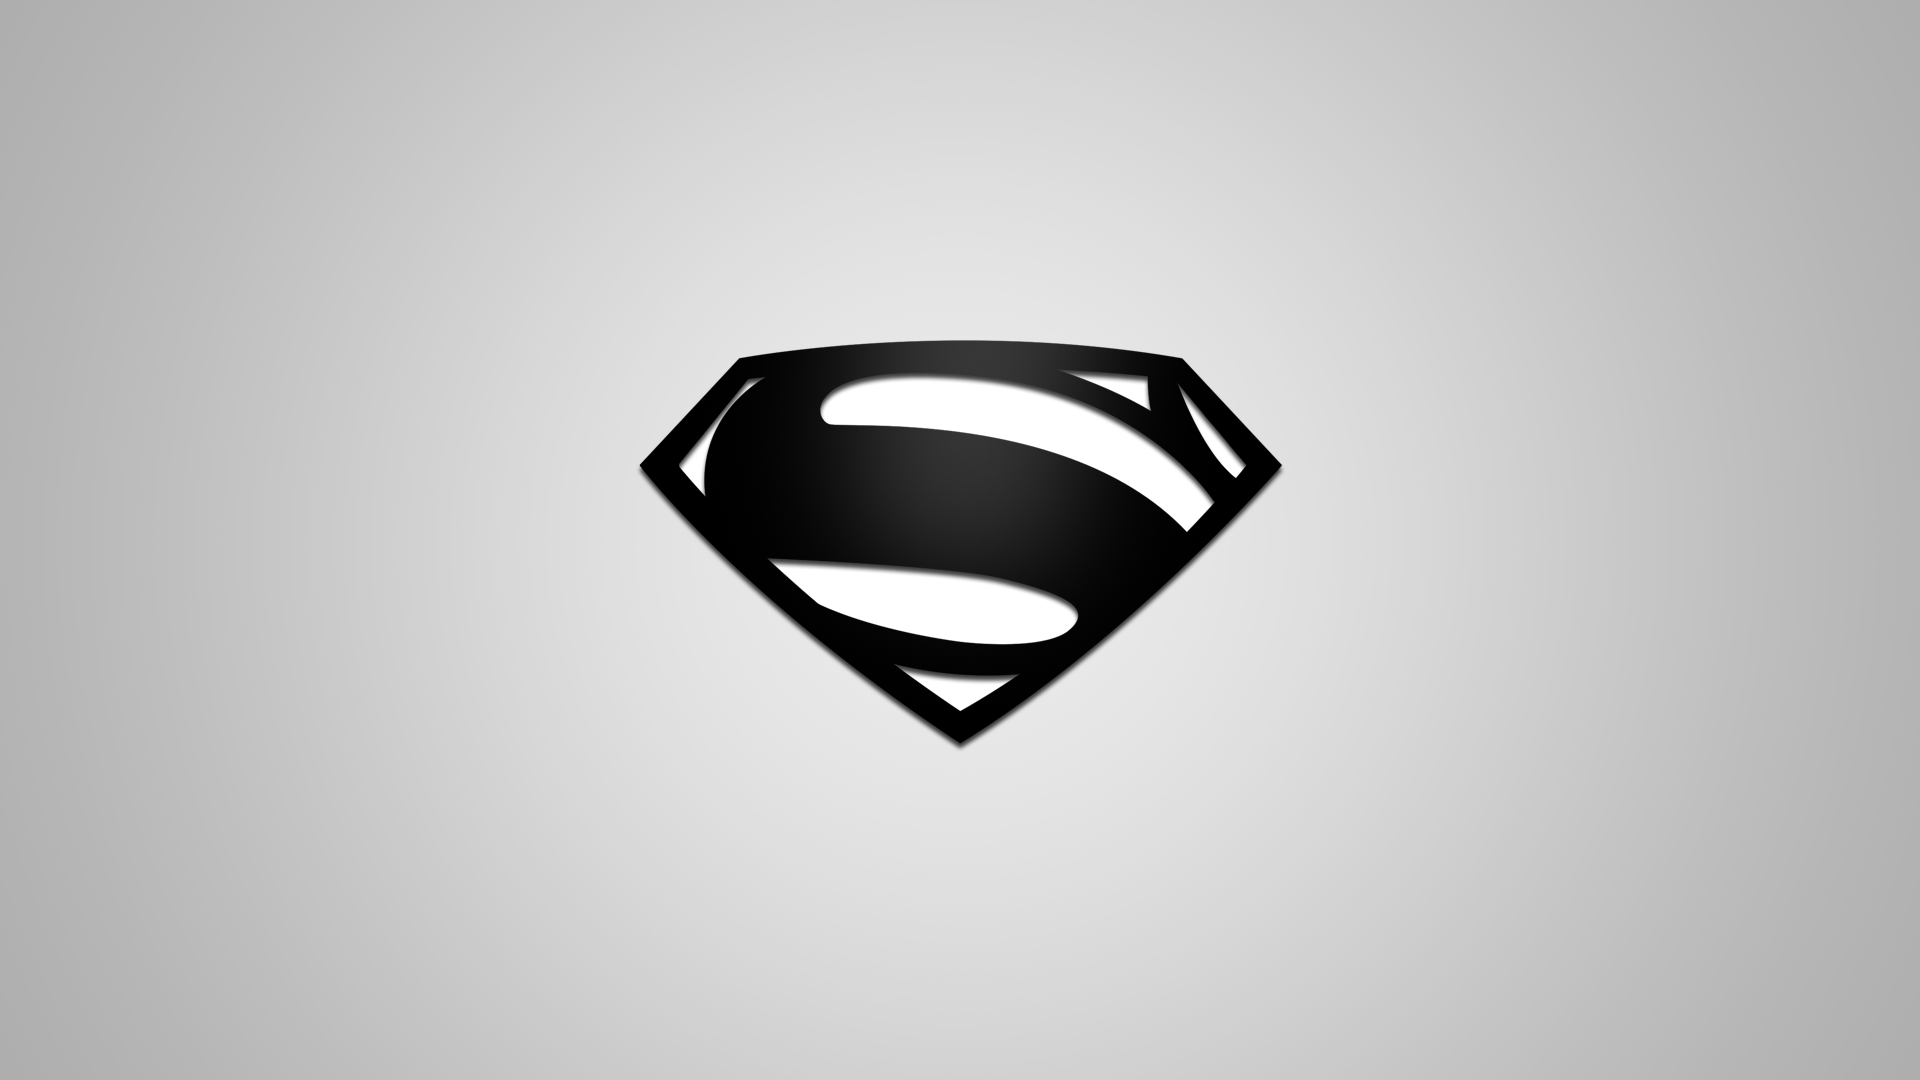 Superman logo(Superman) Wallpaper Image. HD Wallpaper Image